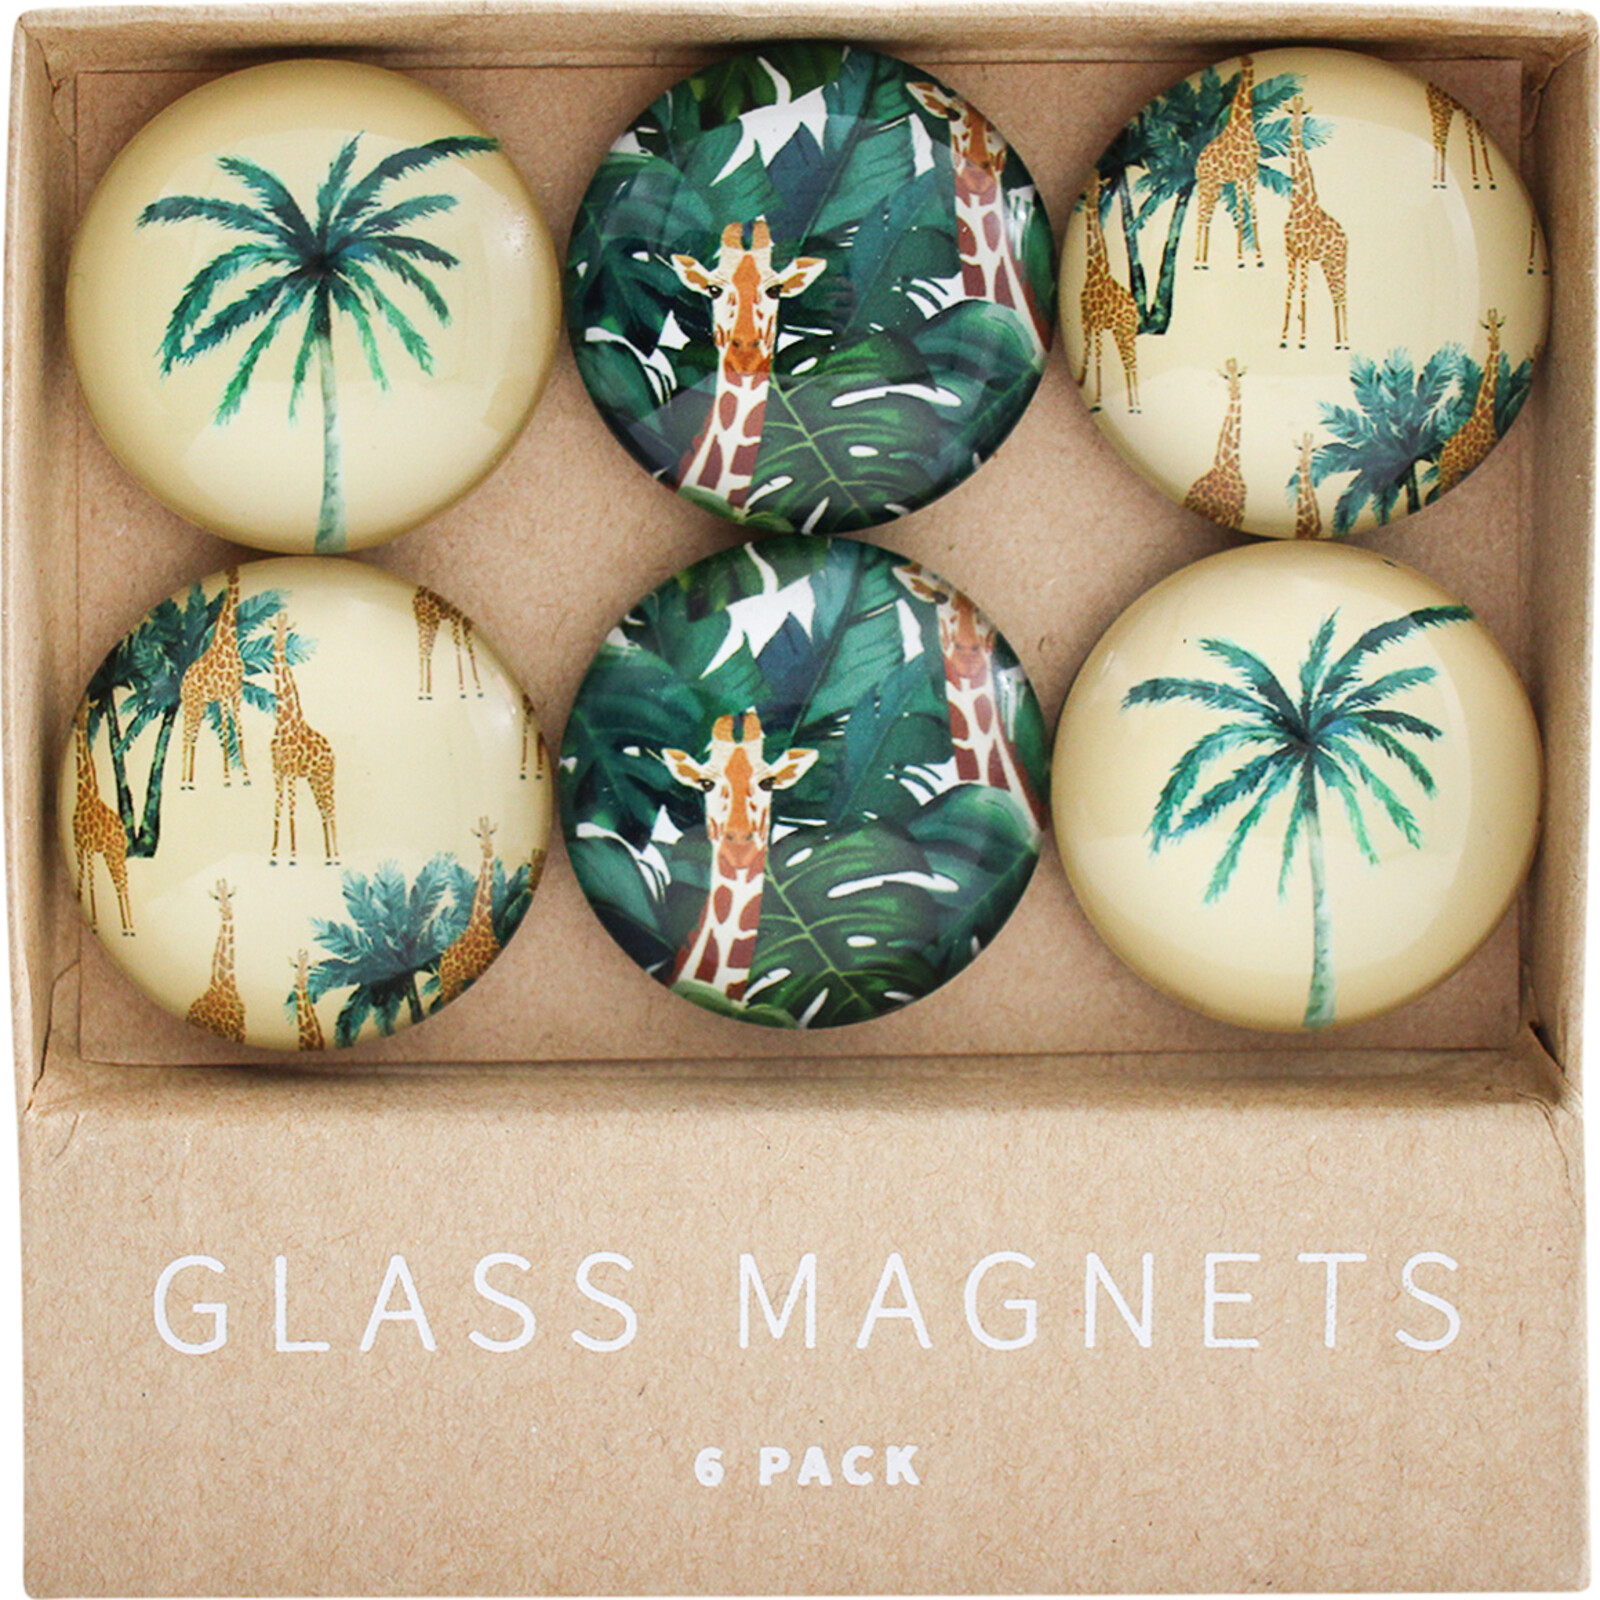 Glass Magnets SavannahS/6